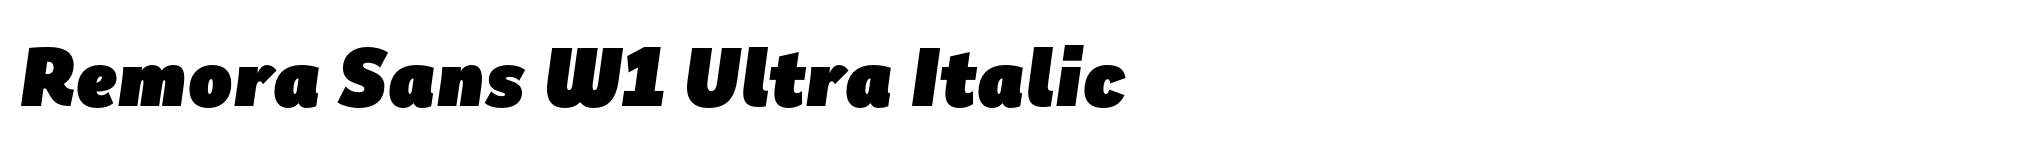 Remora Sans W1 Ultra Italic image